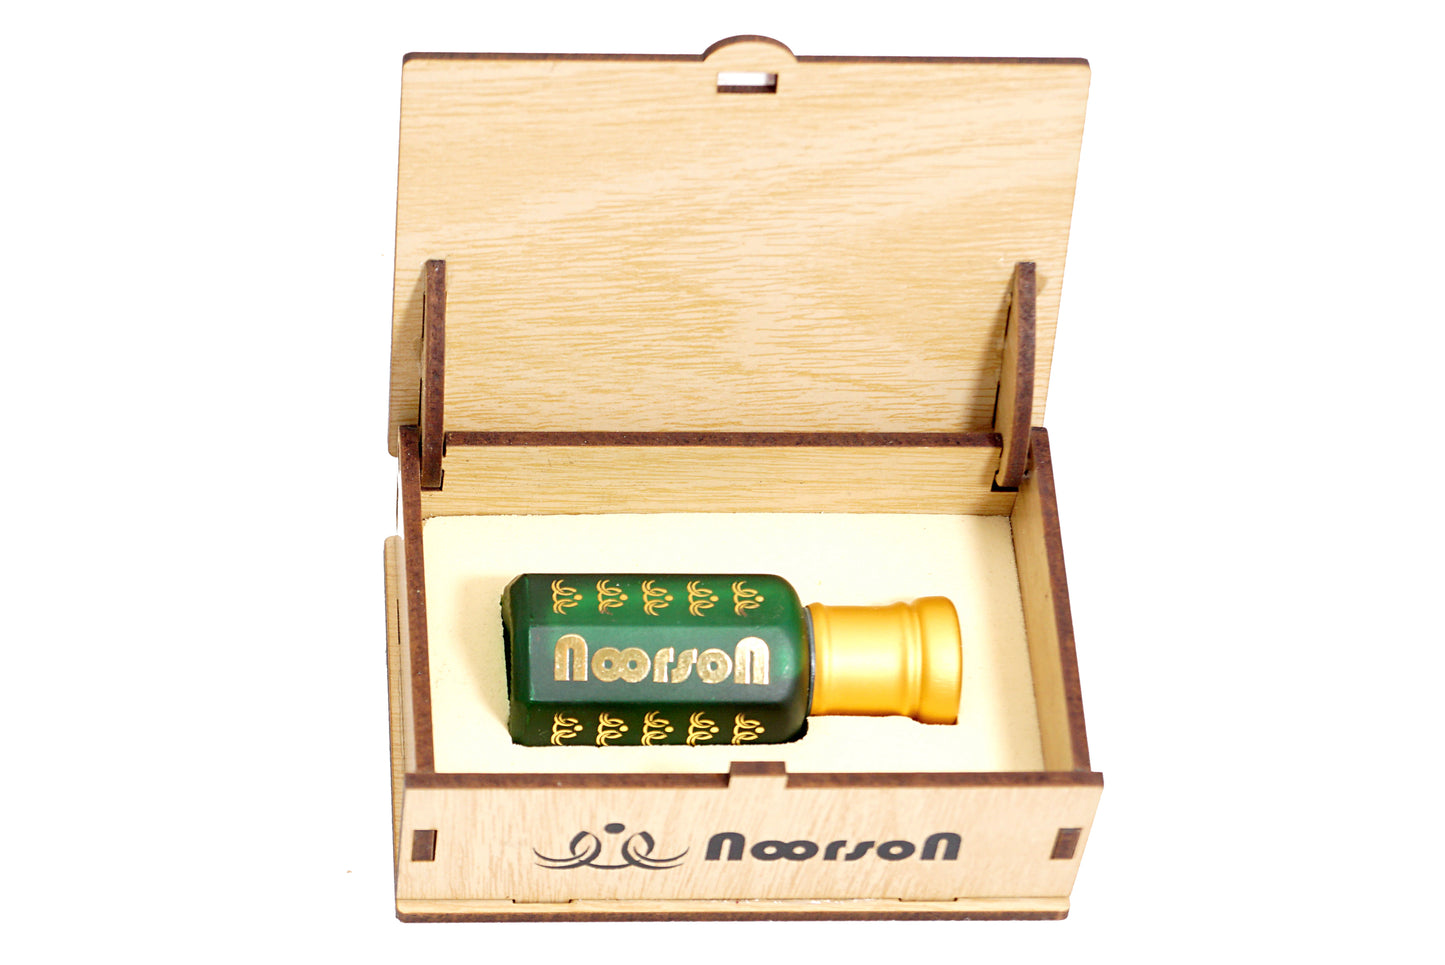 Firdaus Non-Alcoholic Premium Quality Attar Perfume